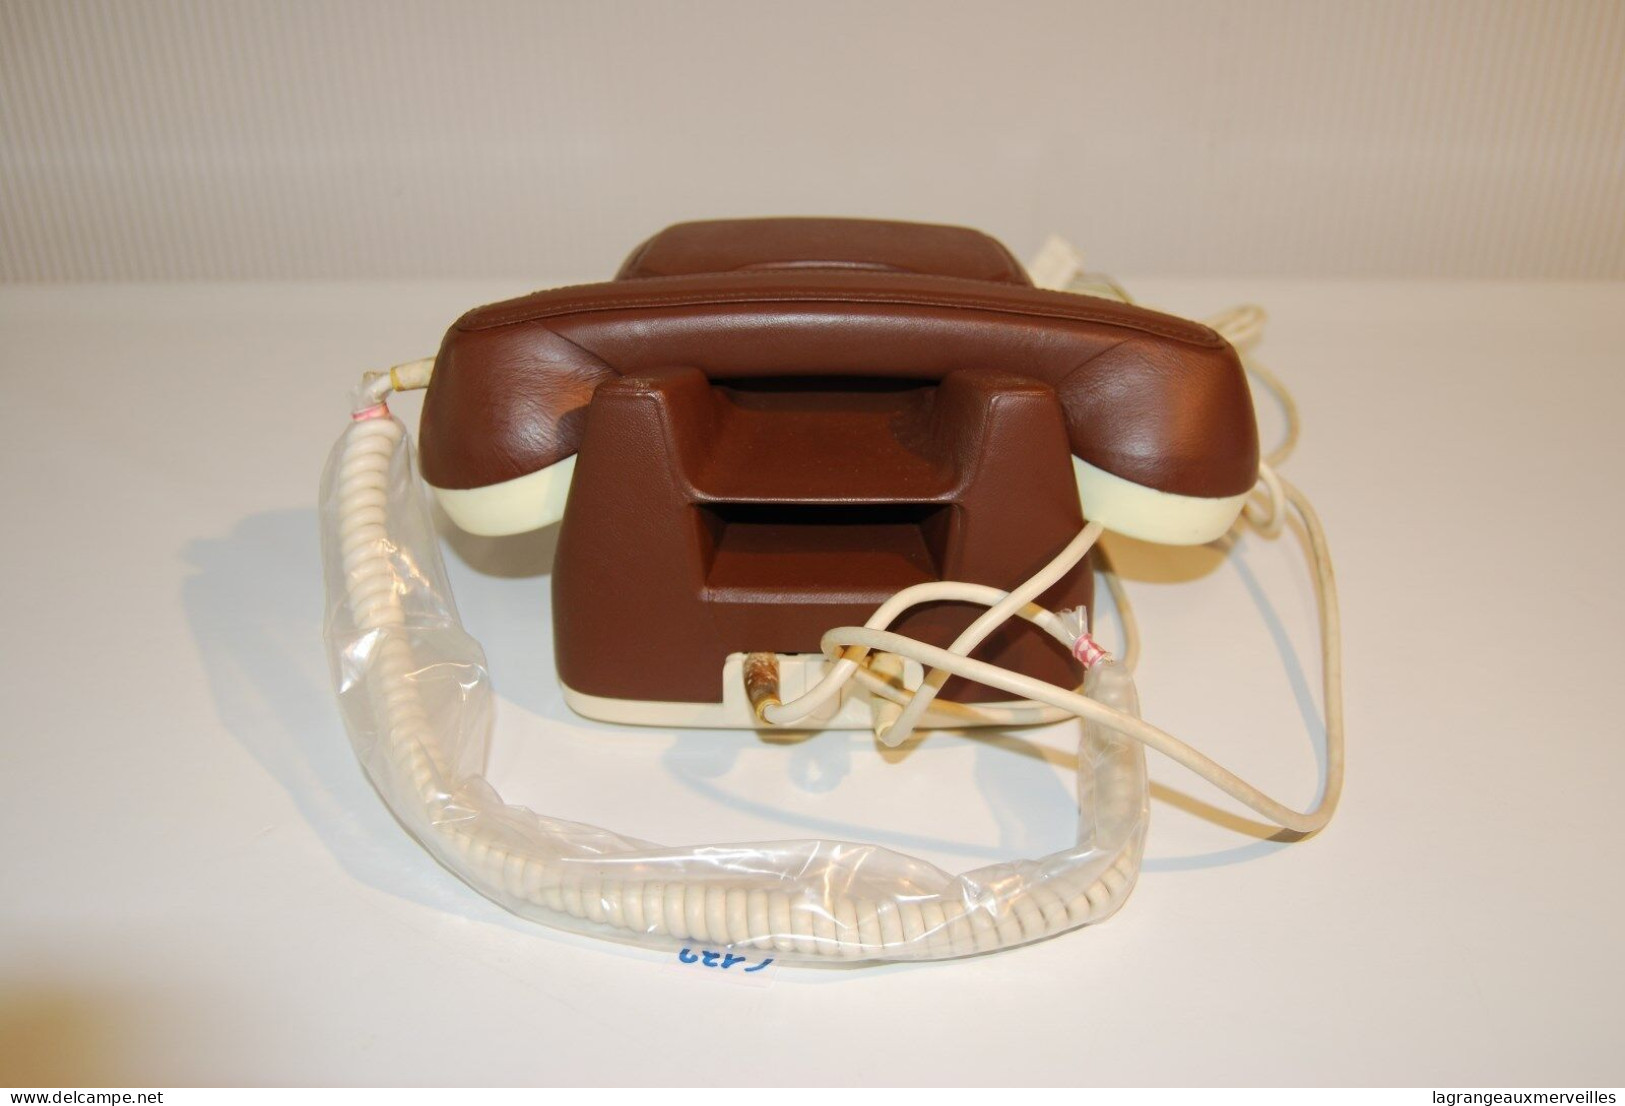 C132 Vintage Retro Phone En Bakelite Noire - Telephony